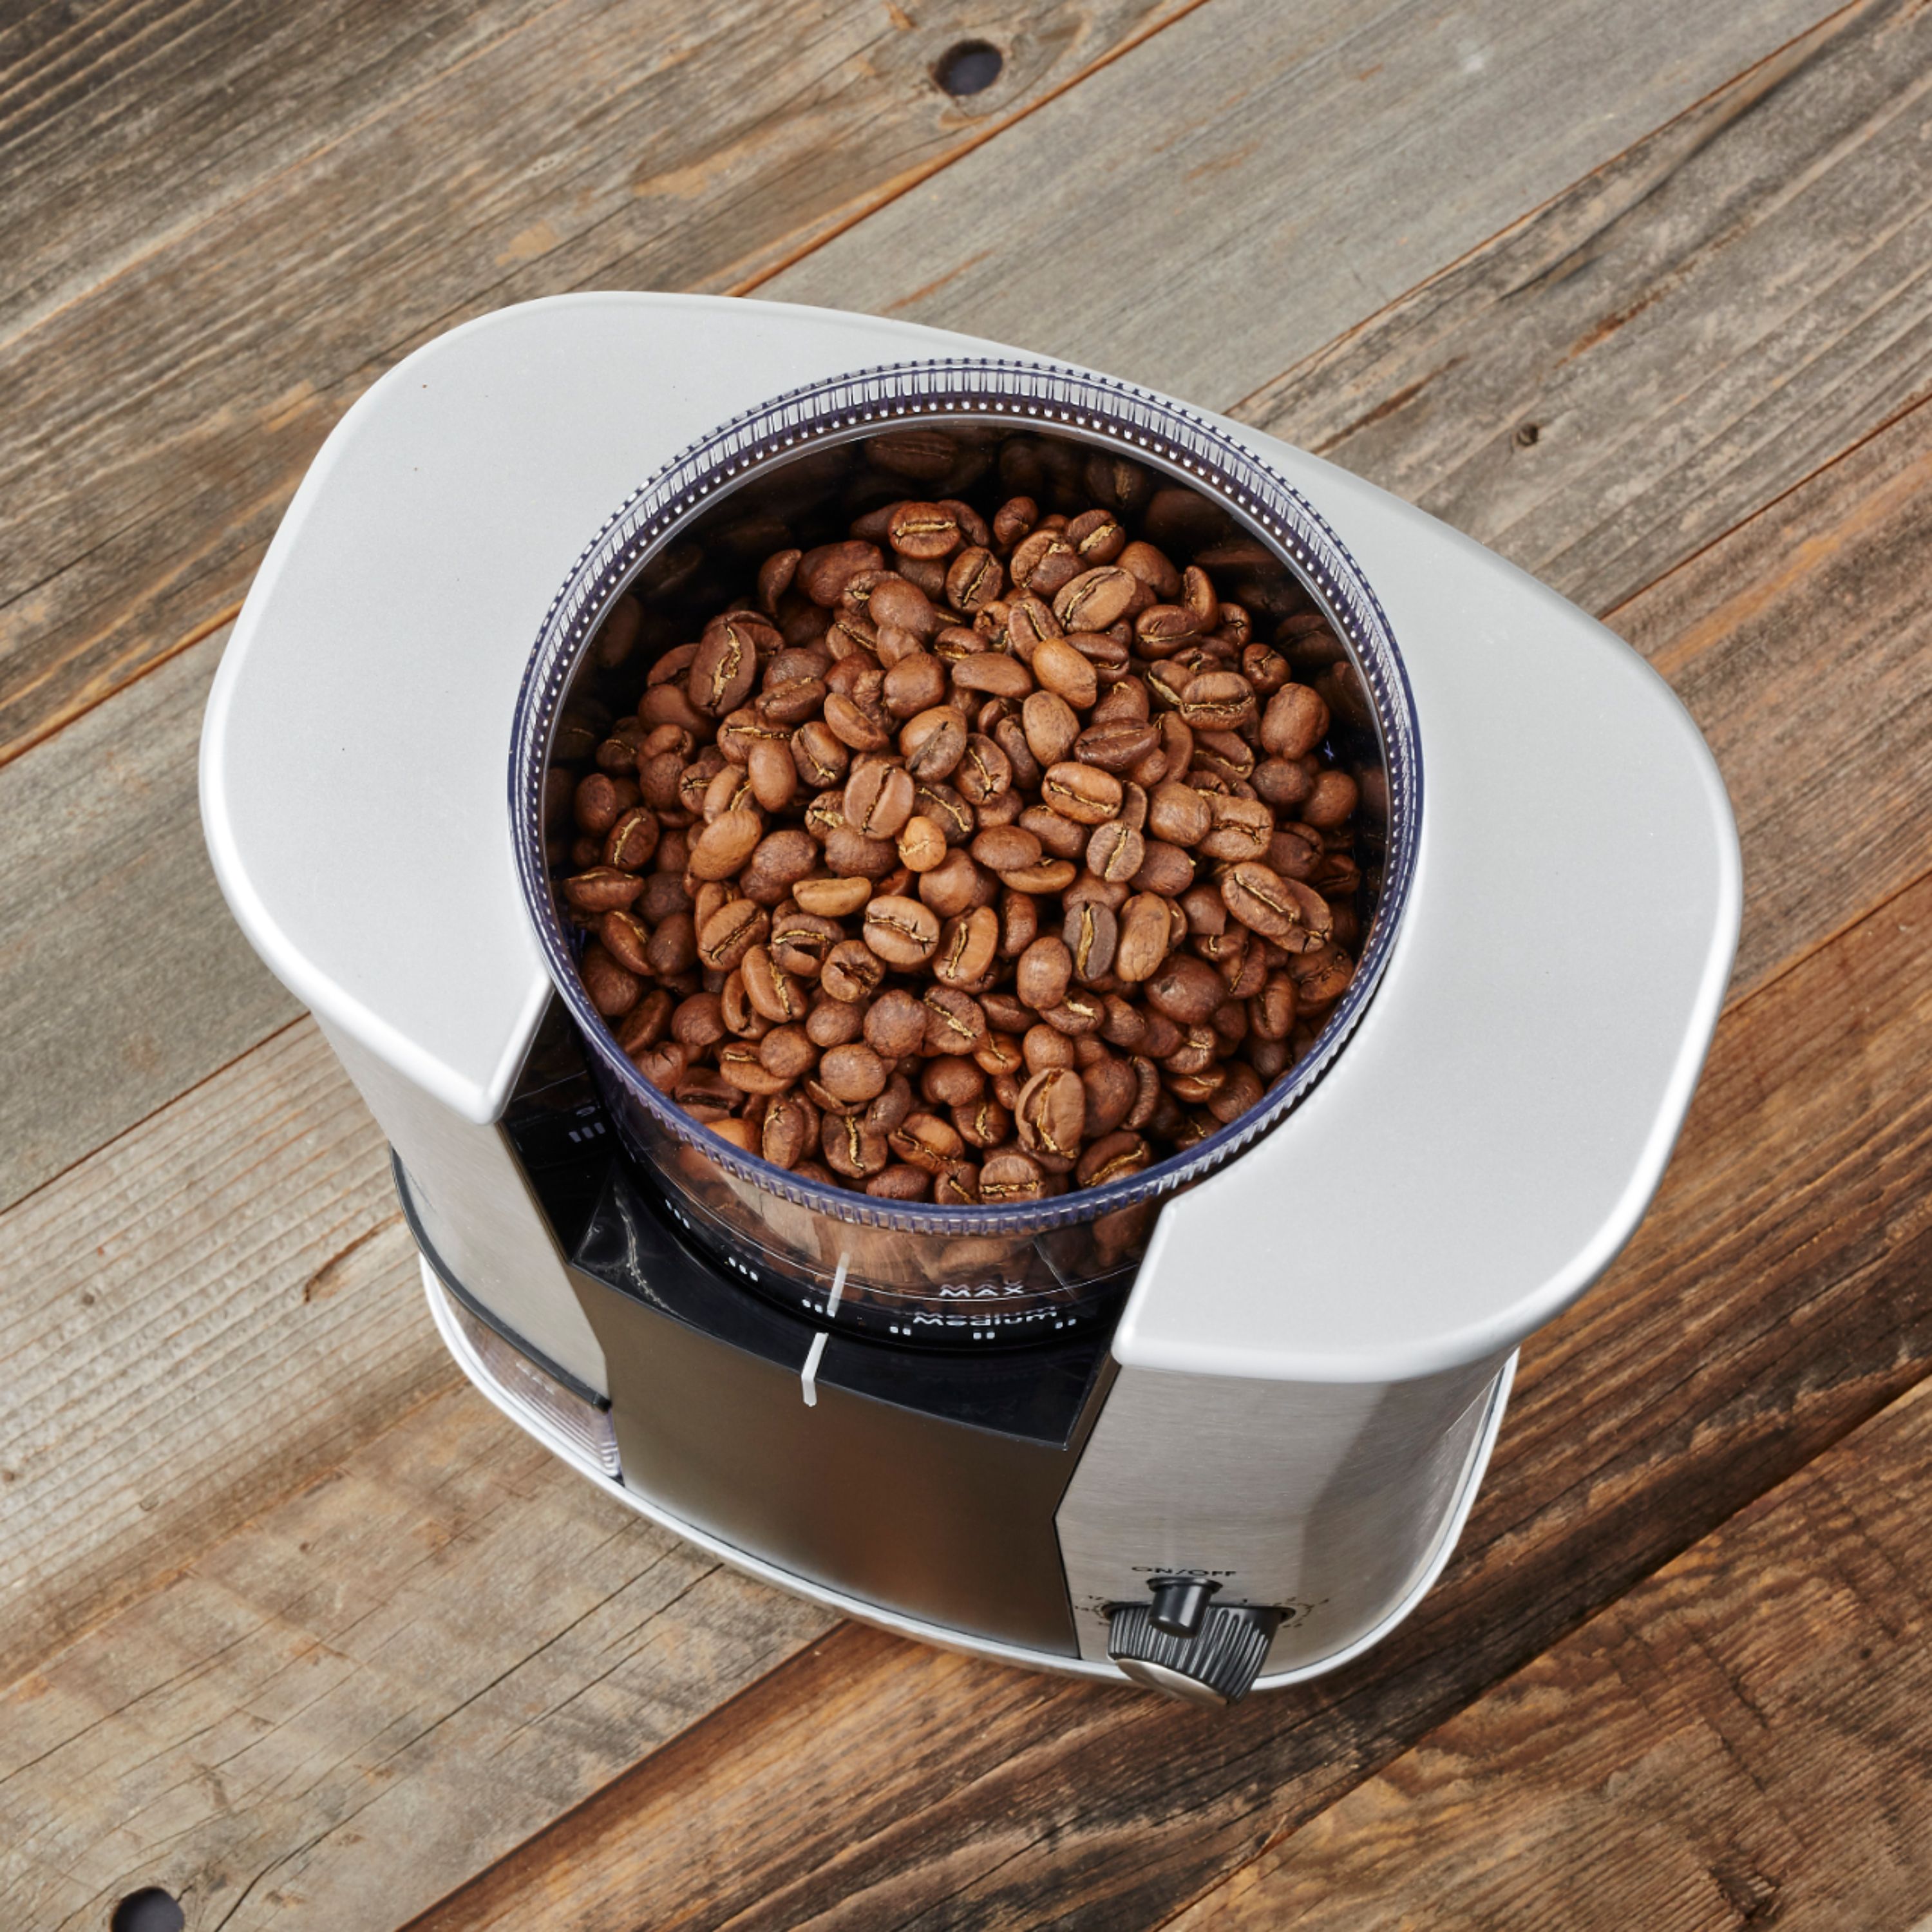 Brim 6.4-Oz. Conical Burr Coffee Grinder Stainless Steel  - Best Buy